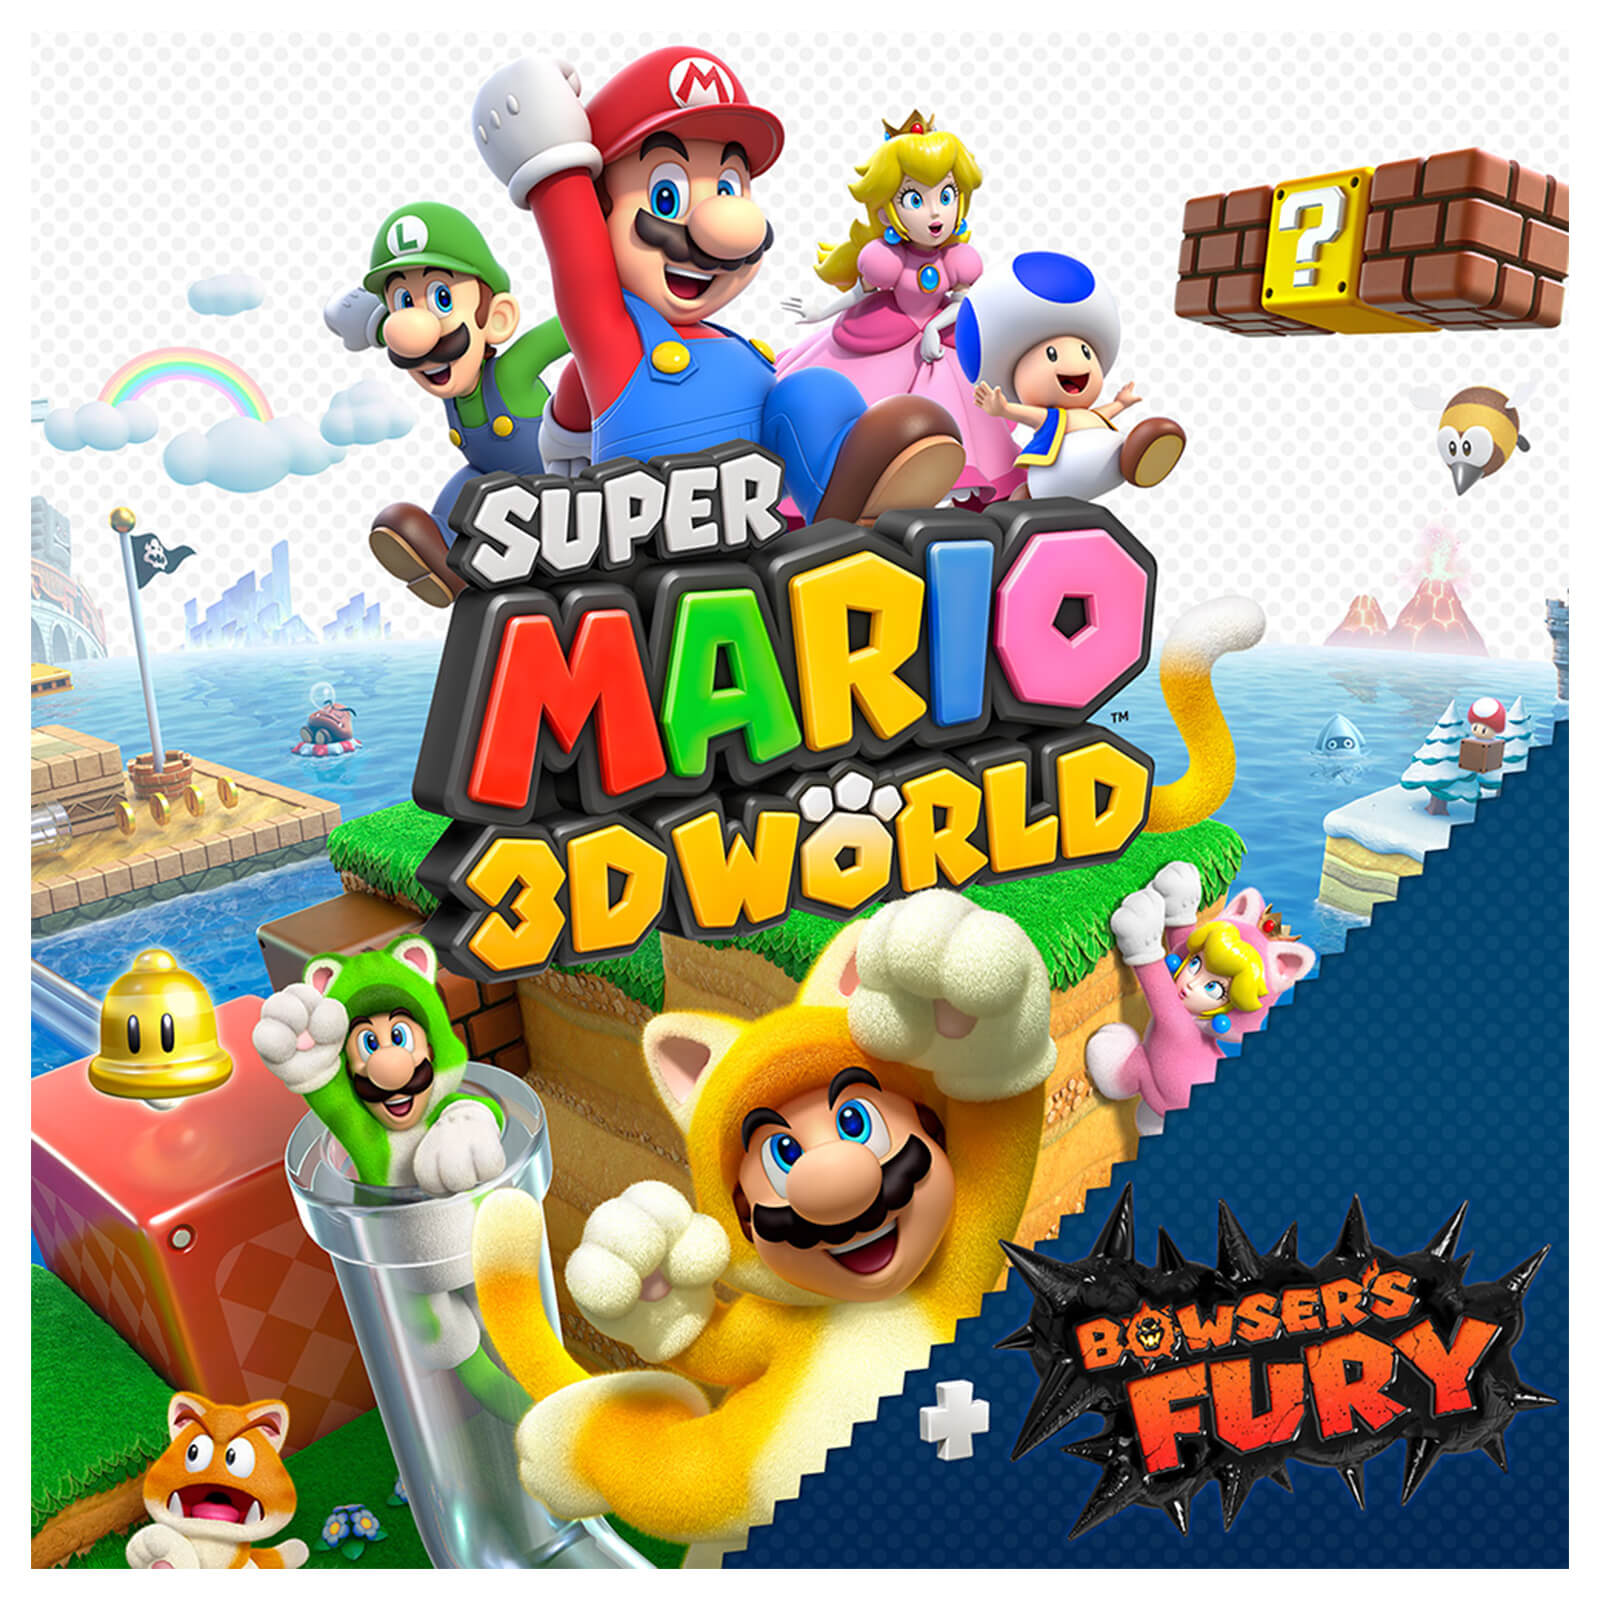 Super Mario 3D World + Bowser's Fury | Nintendo Official UK Store